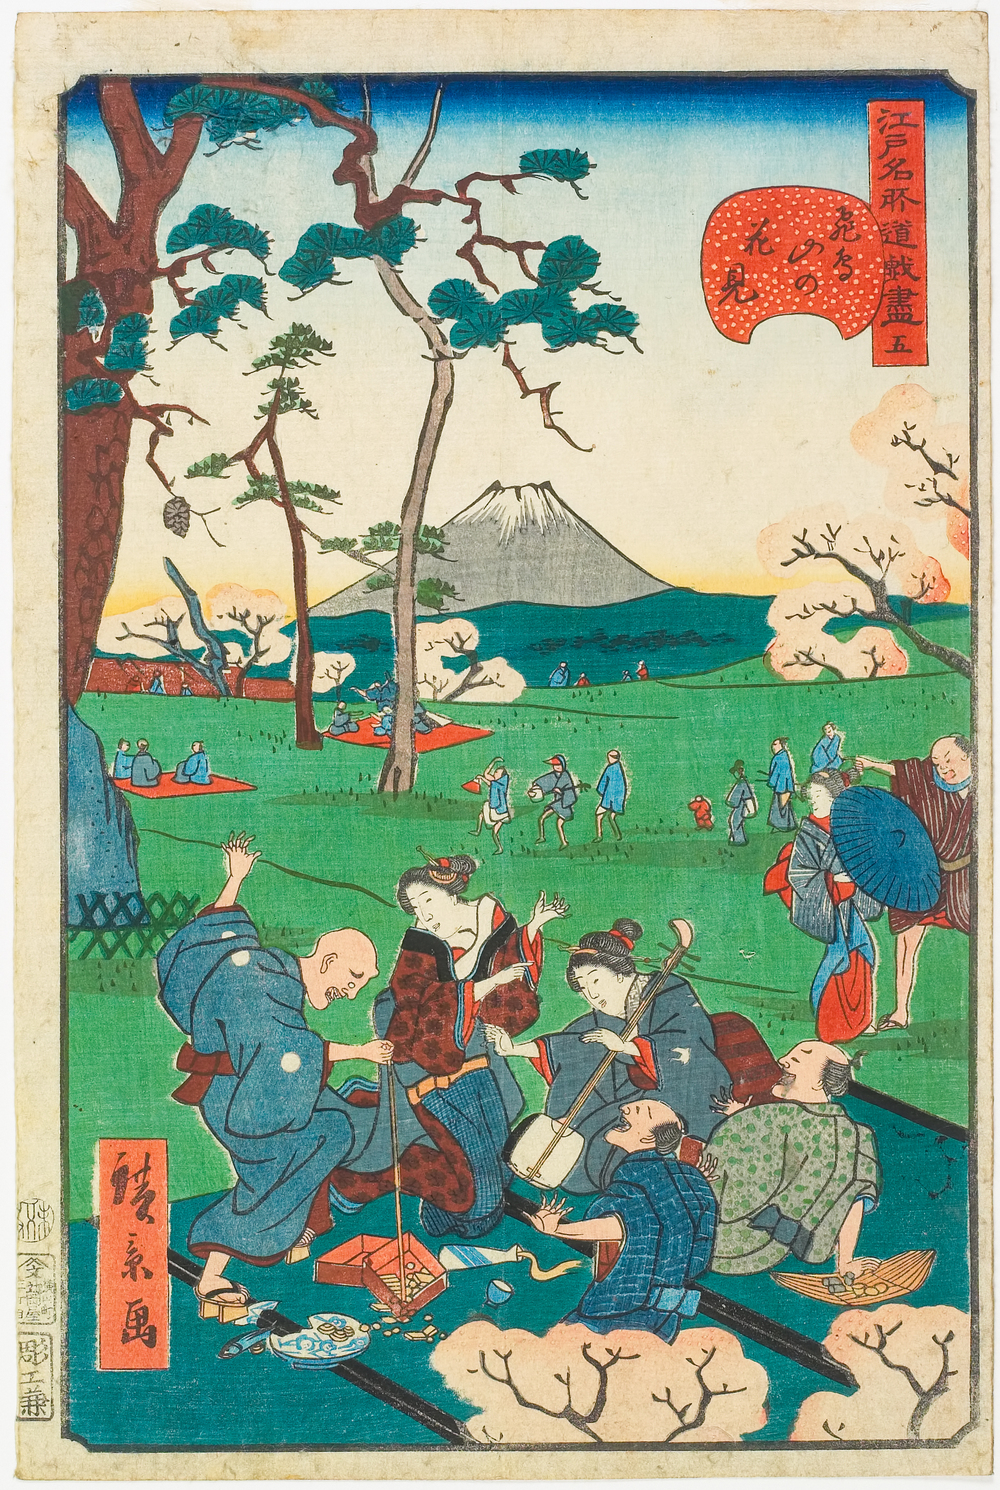 Utagawa Hirokage, Five, Cherry-Blossom Viewing at Asuka Hill, 1859.